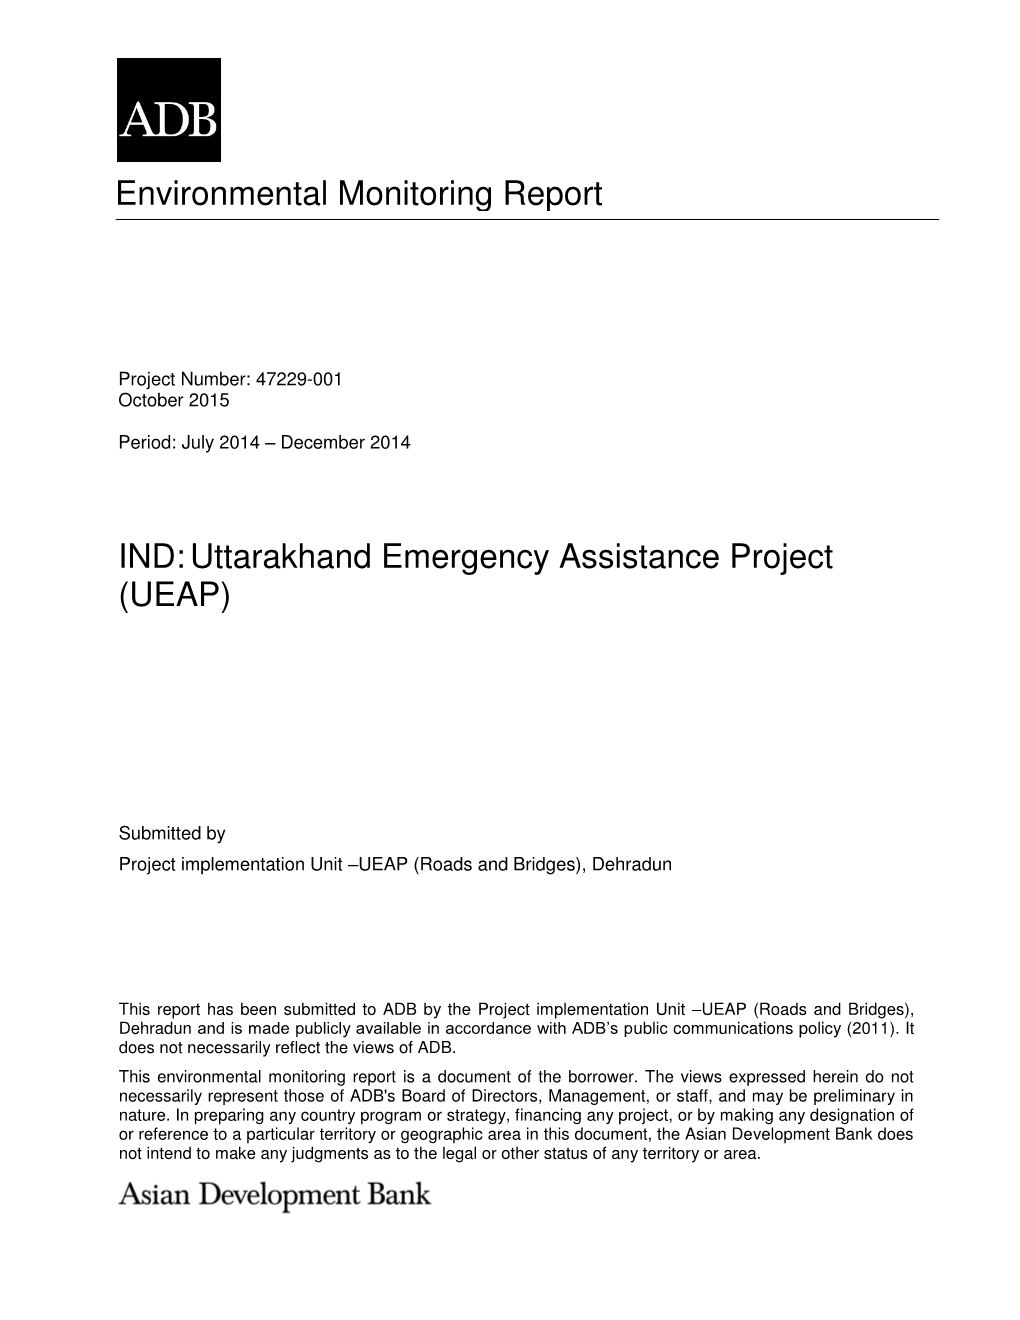 IND:Uttarakhand Emergency Assistance Project (UEAP)